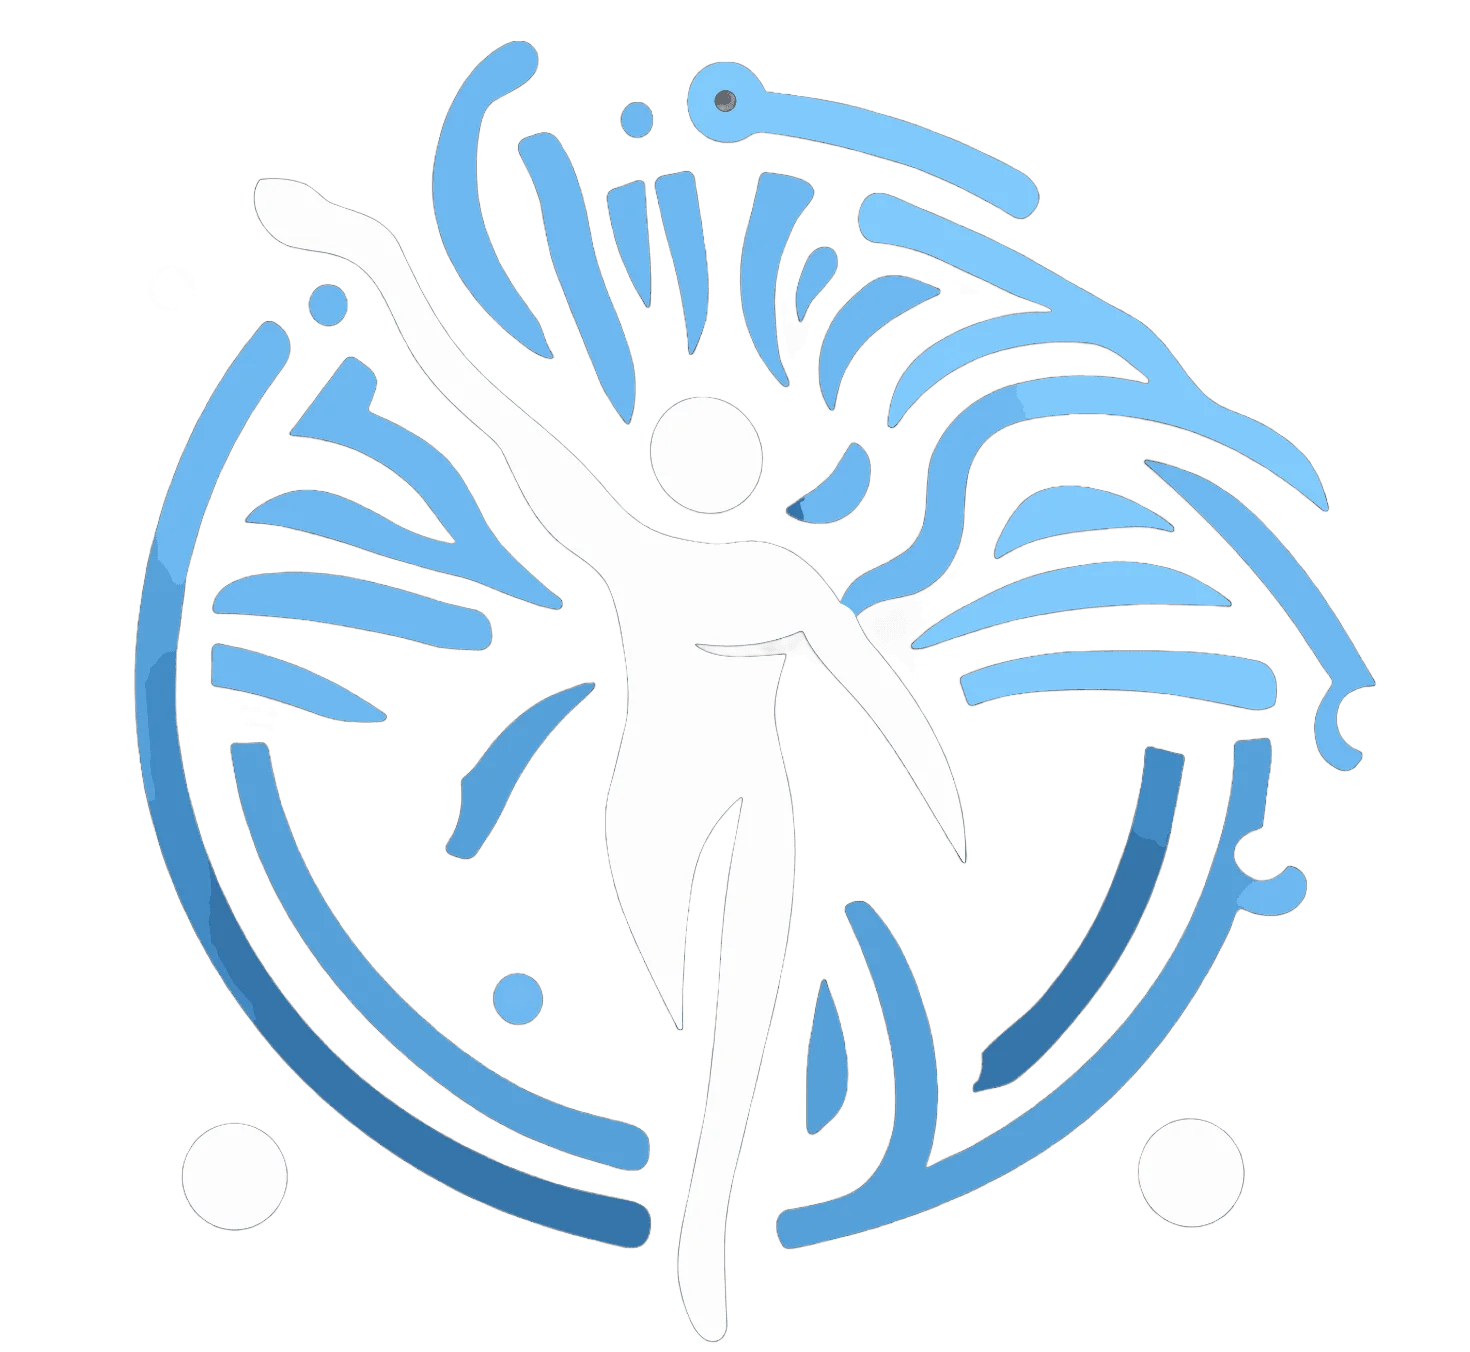 PREVAIL Human website logo